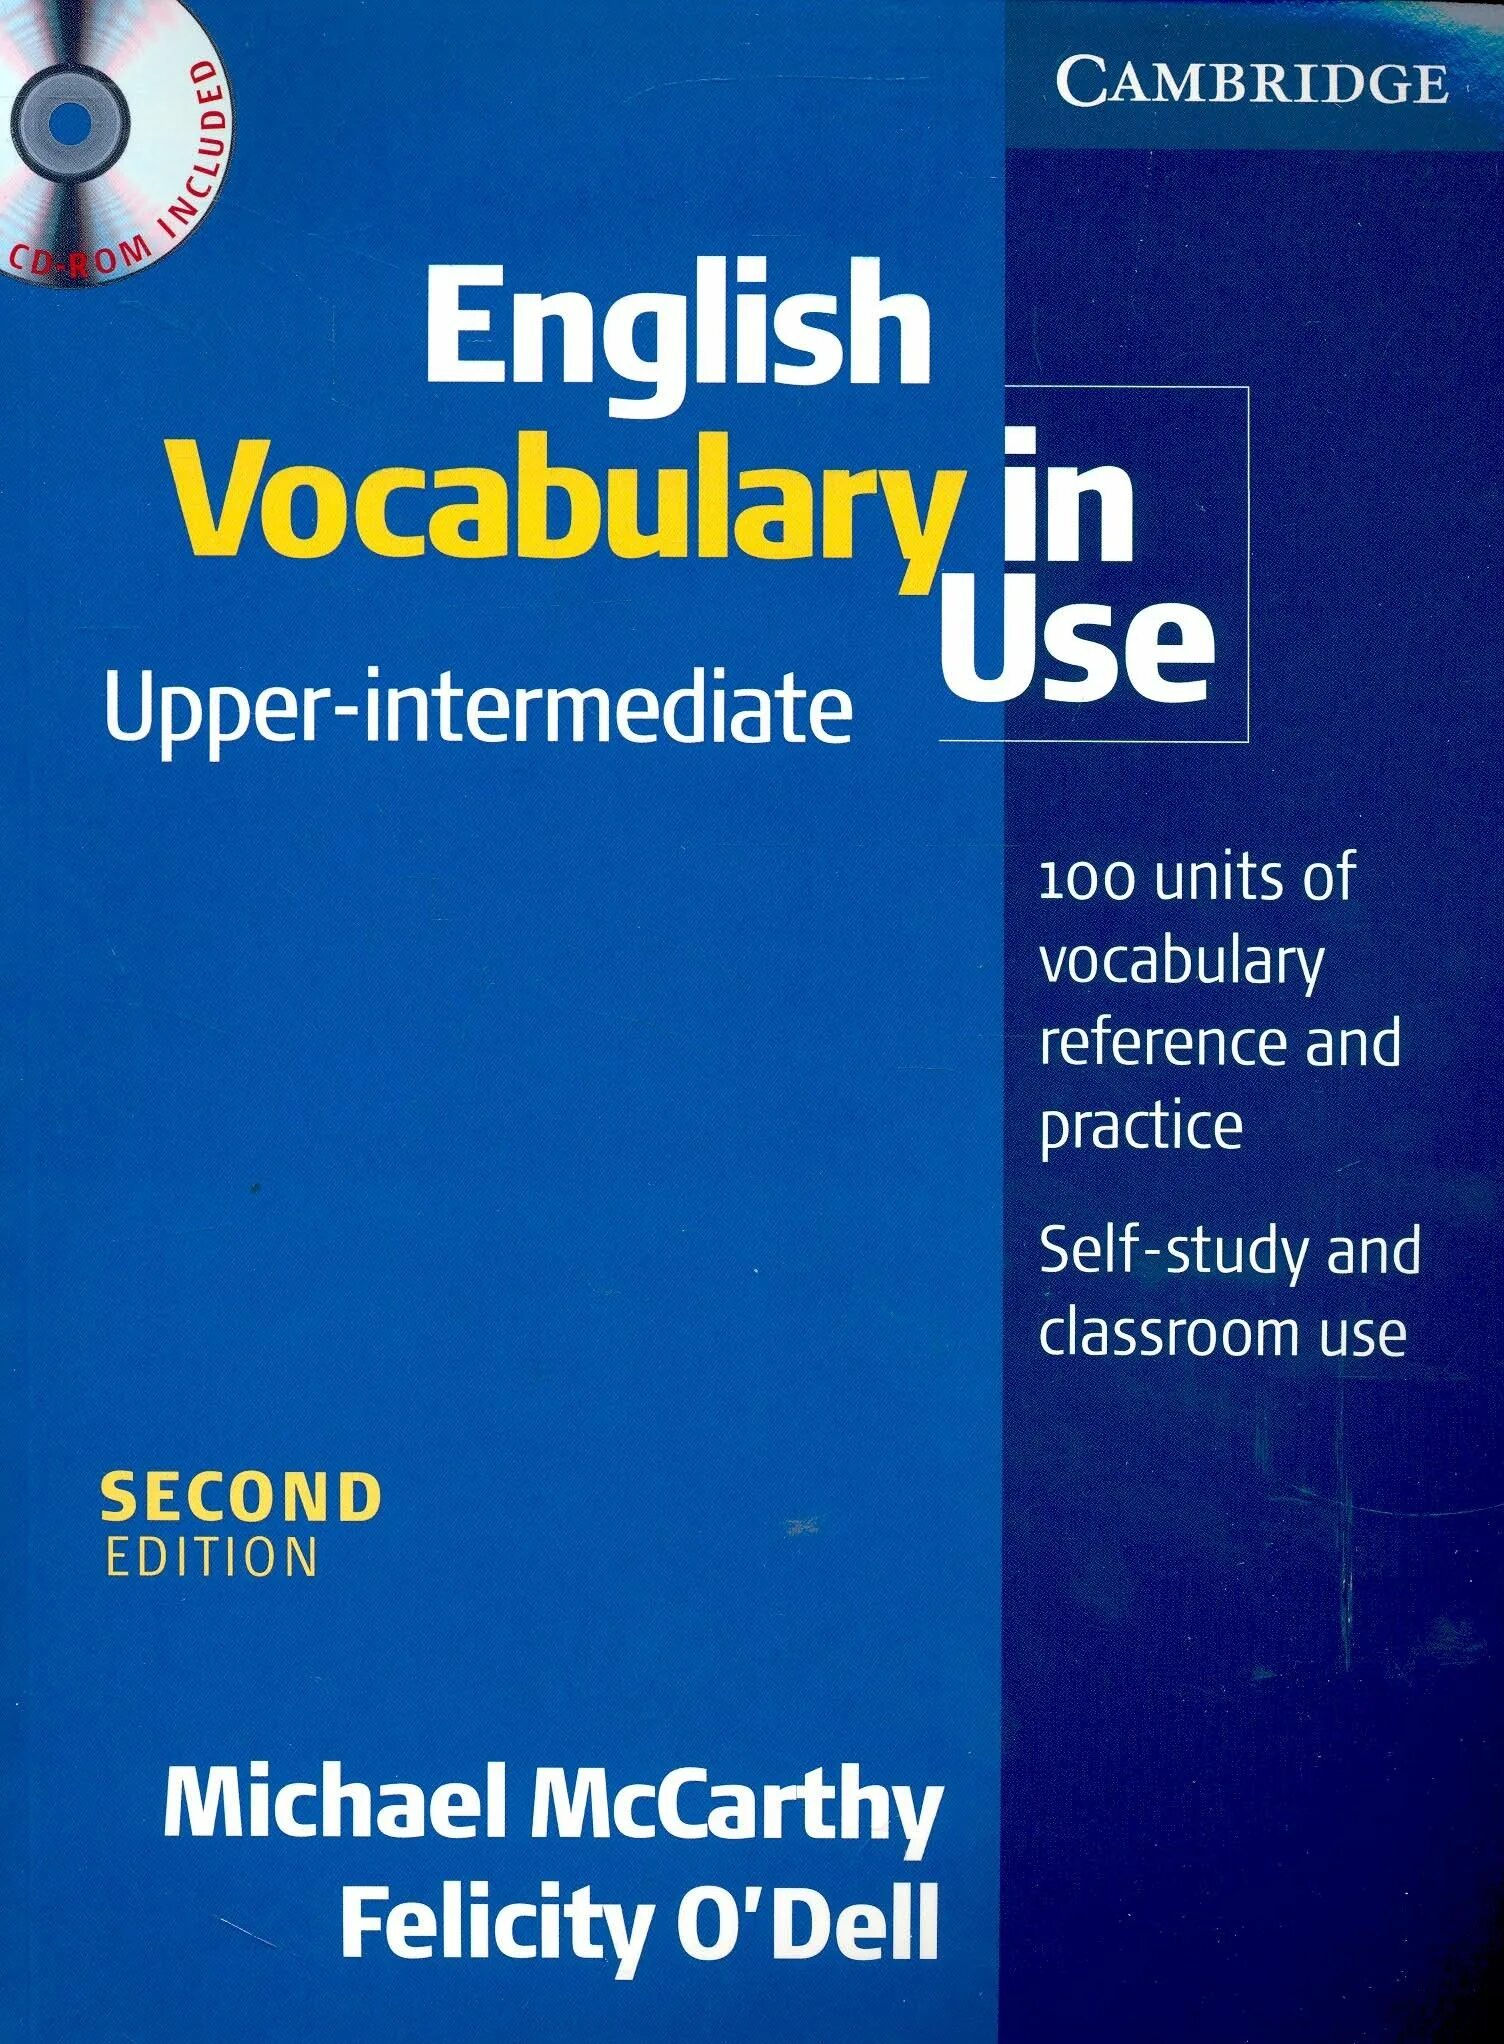 Upper inter. English Vocabulary in use Upper-Intermediate. Cambridge book English in use Intermediate. English Grammar in use Intermediate Cambridge with answers. MCCARTHY English Vocabulary in use Upper Intermediate.